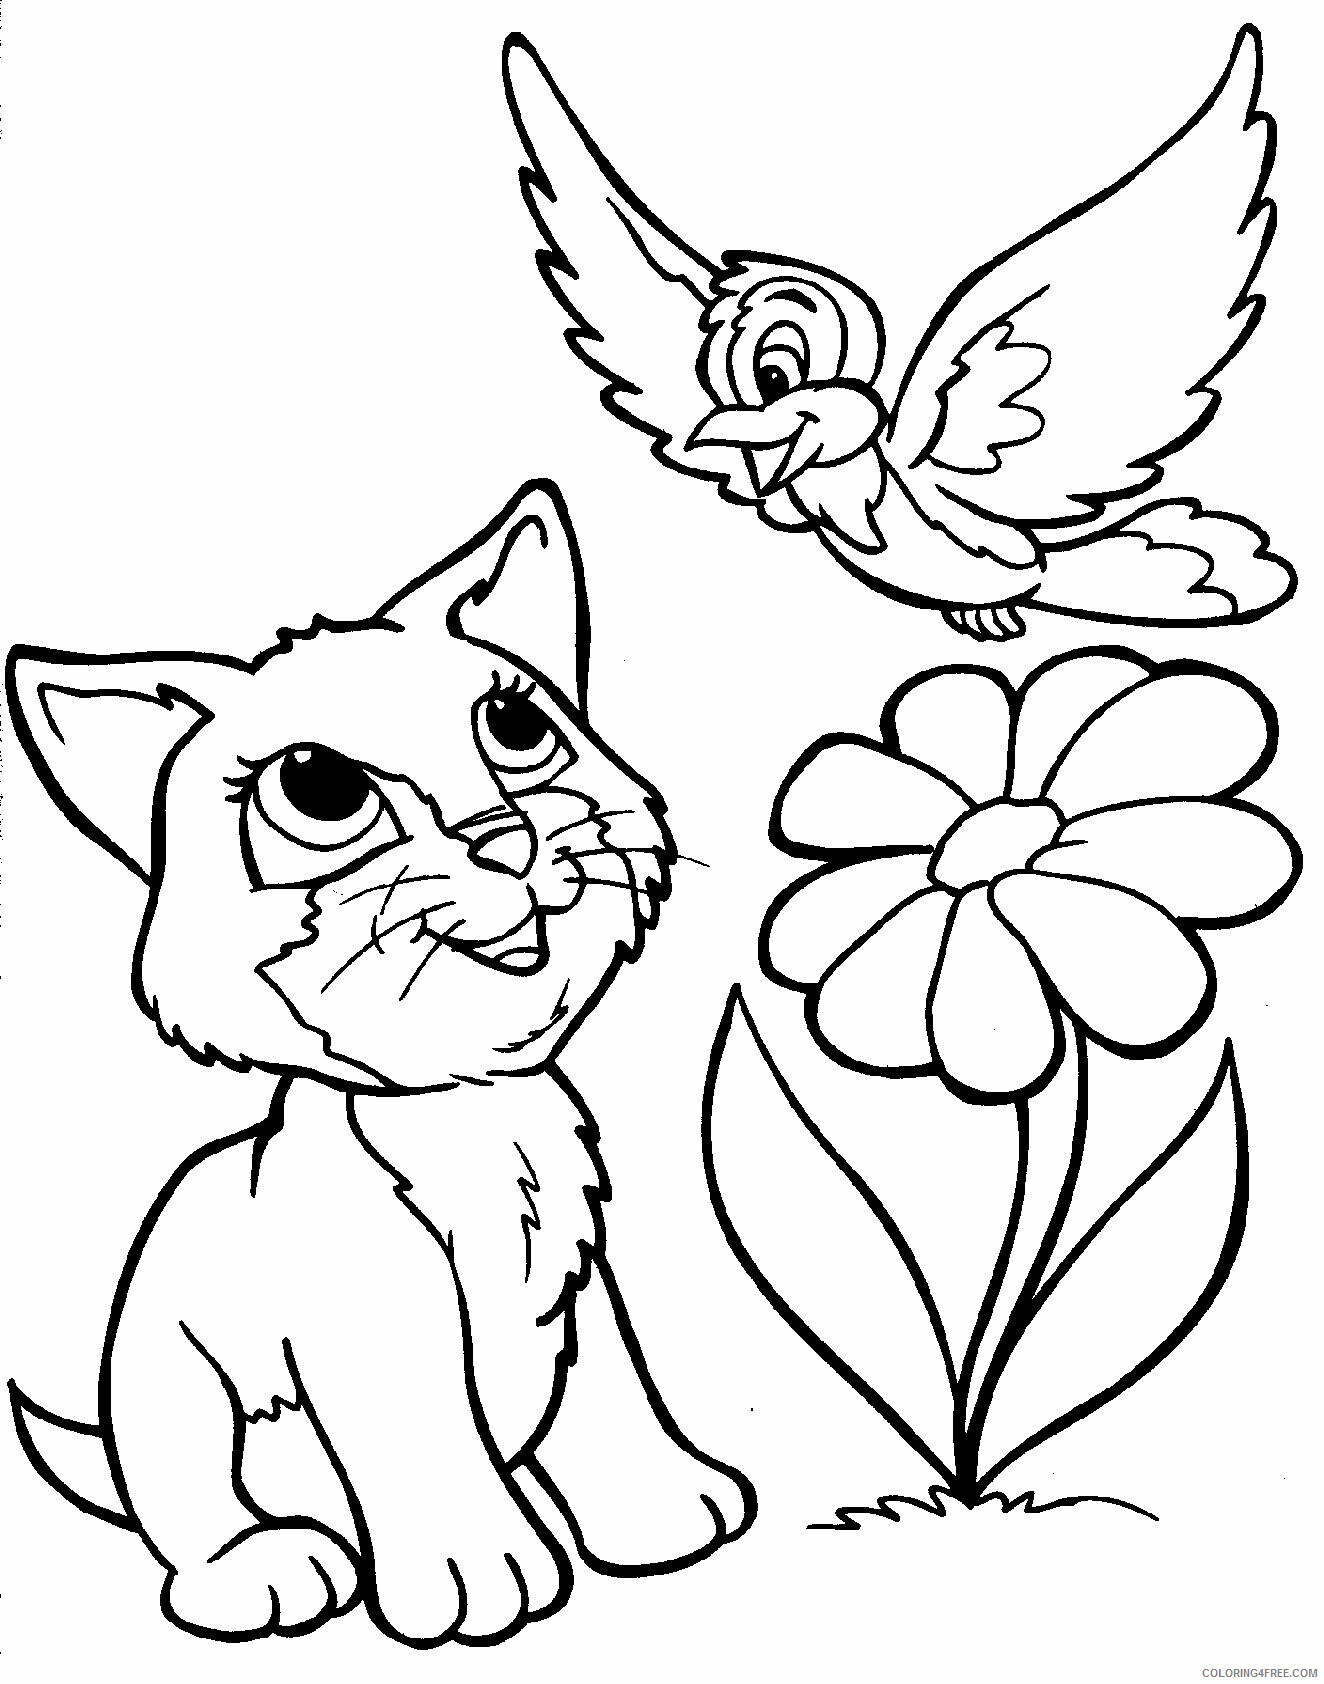 Kitten Coloring Pages Animal Printable Sheets Free Kitten 2021 2986 Coloring4free